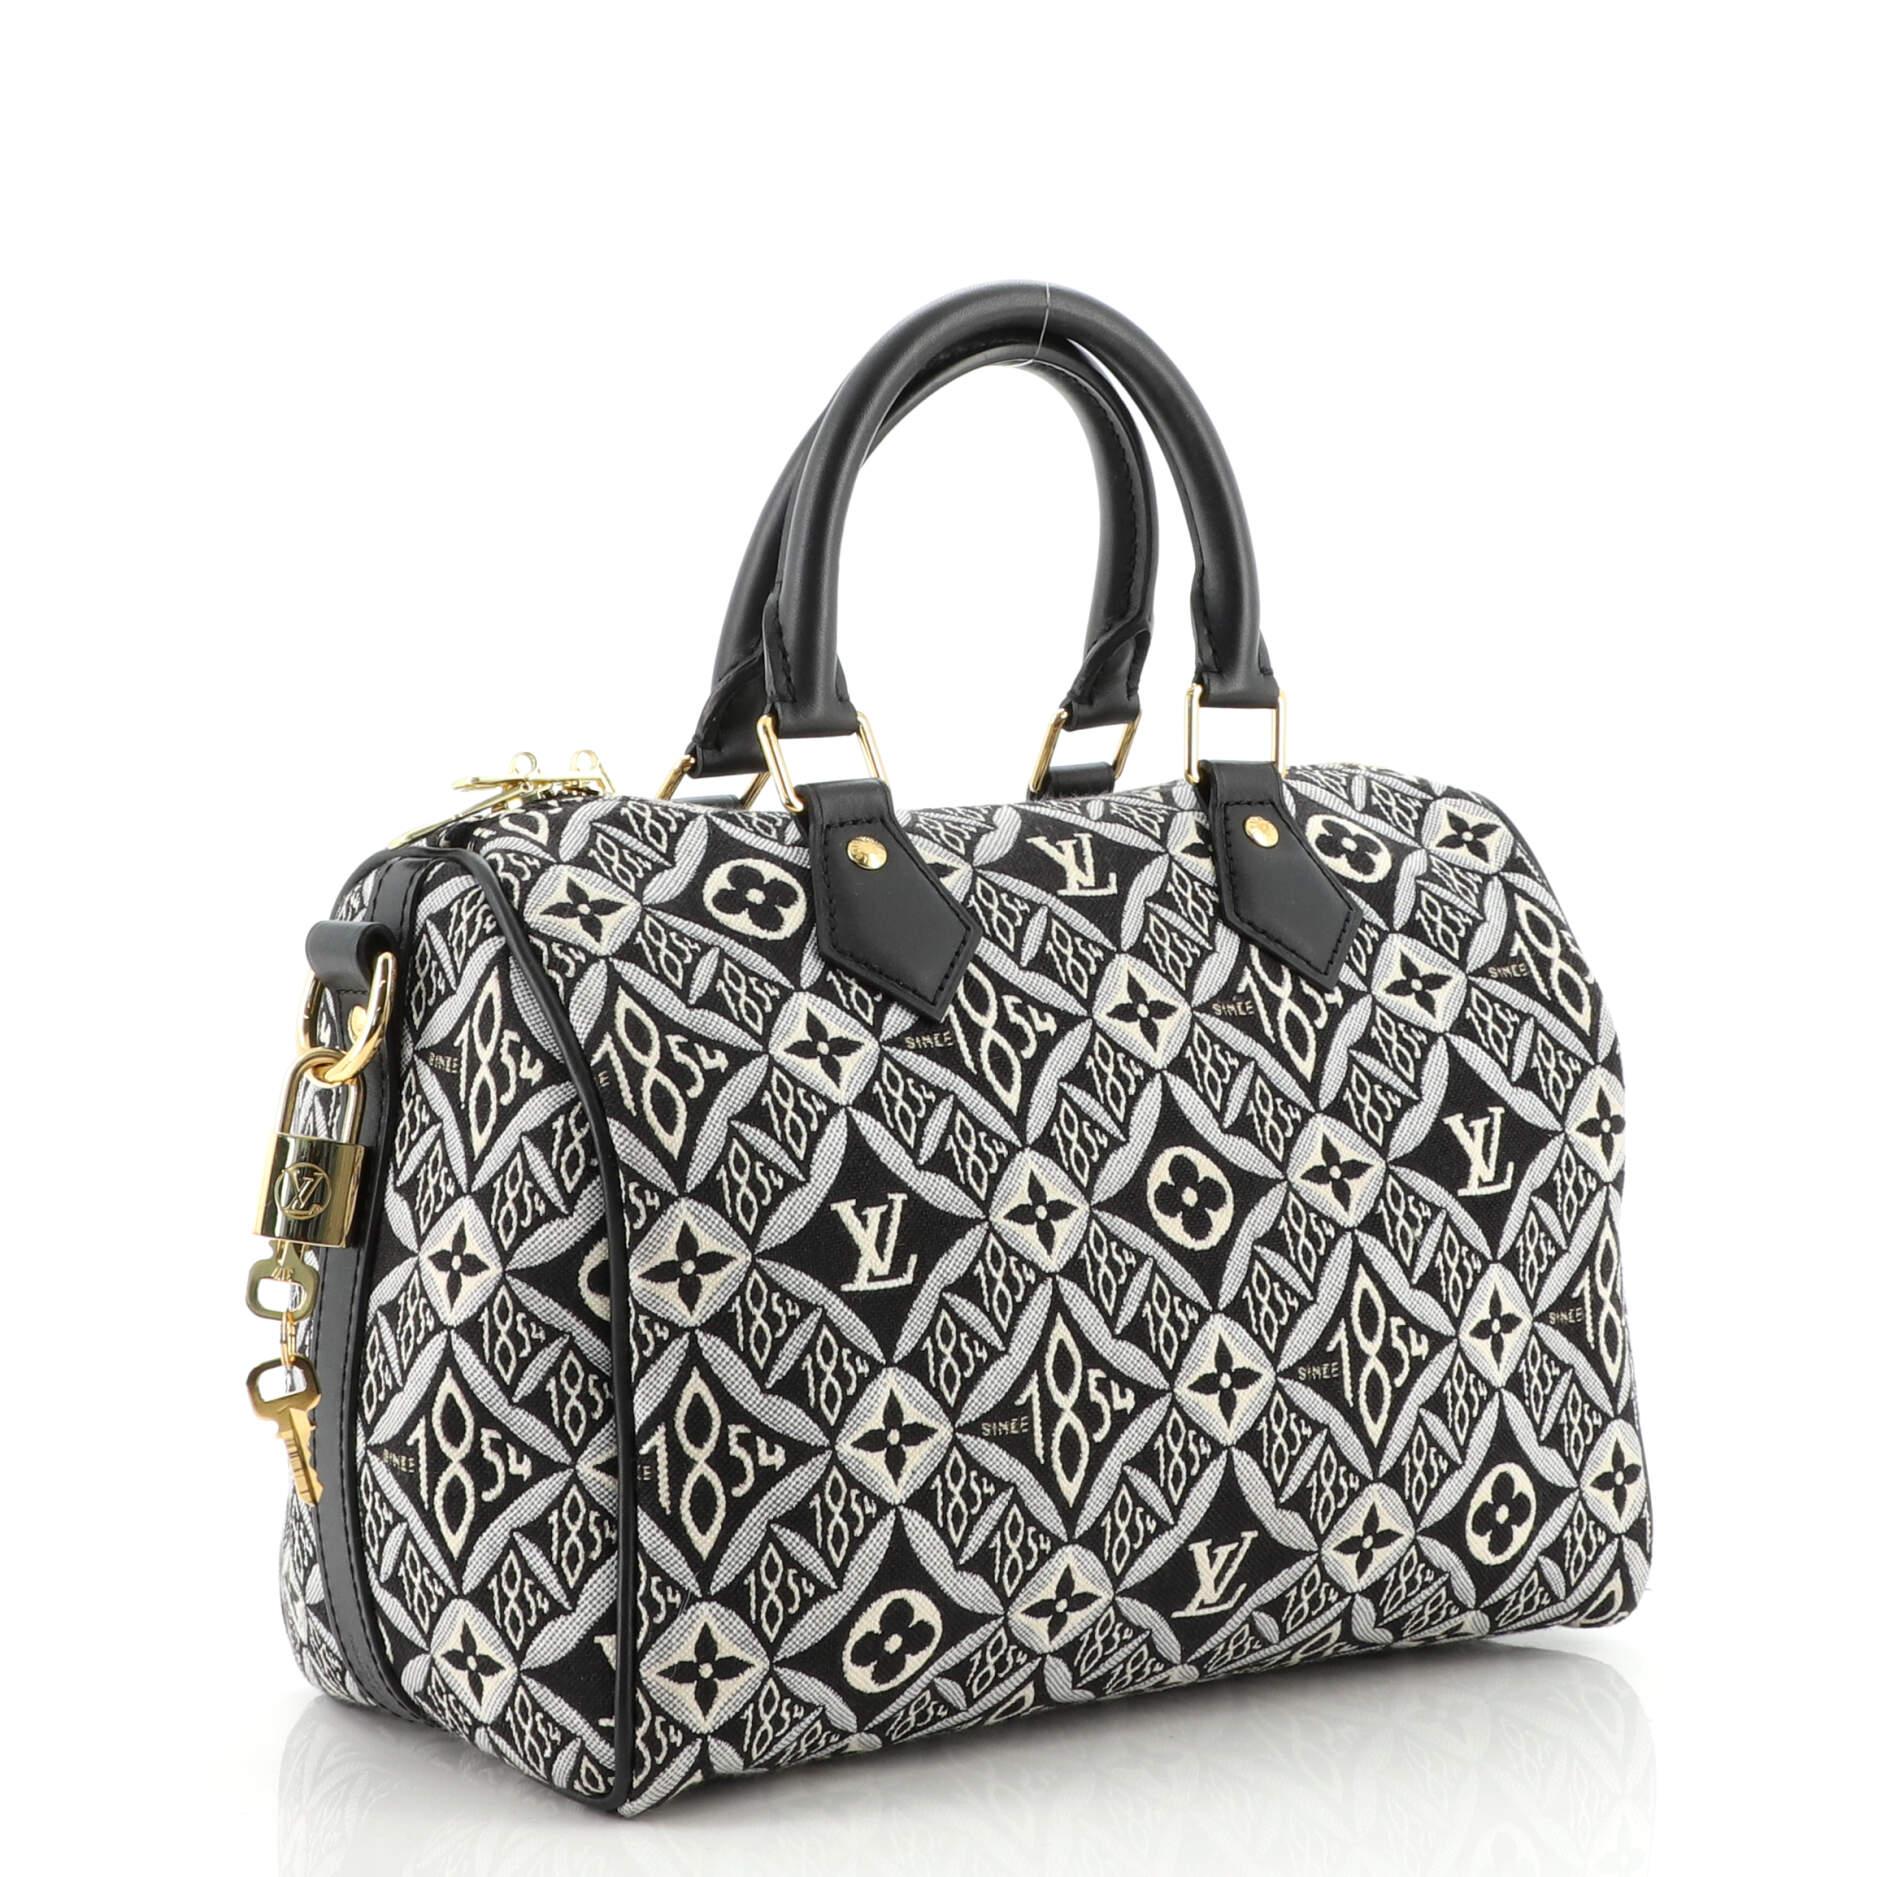 Black Louis Vuitton Speedy Bandouliere Bag Limited Edition Since 1854 Monogram 